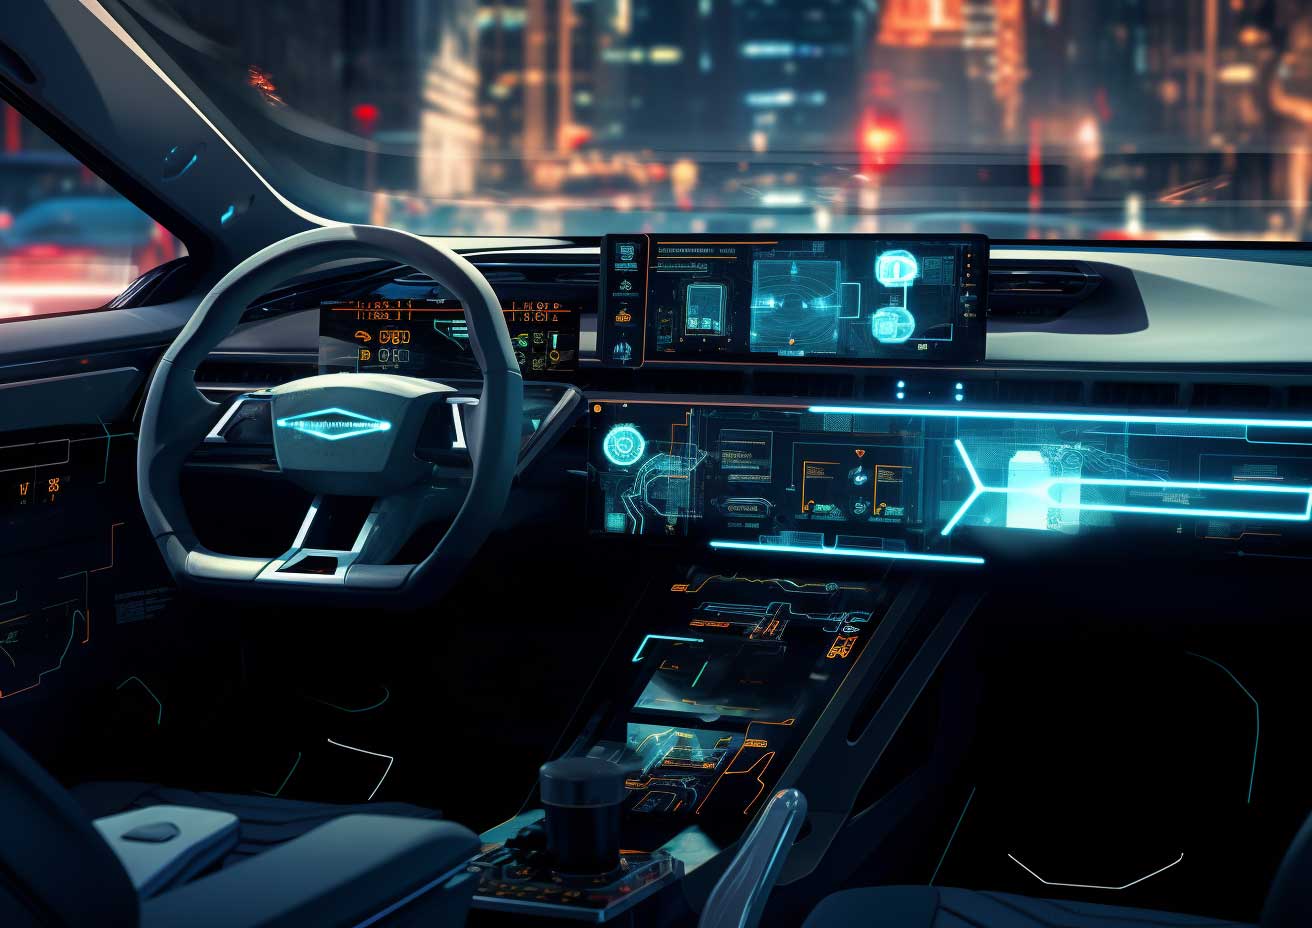 The sleek interior of a futuristic car at night.